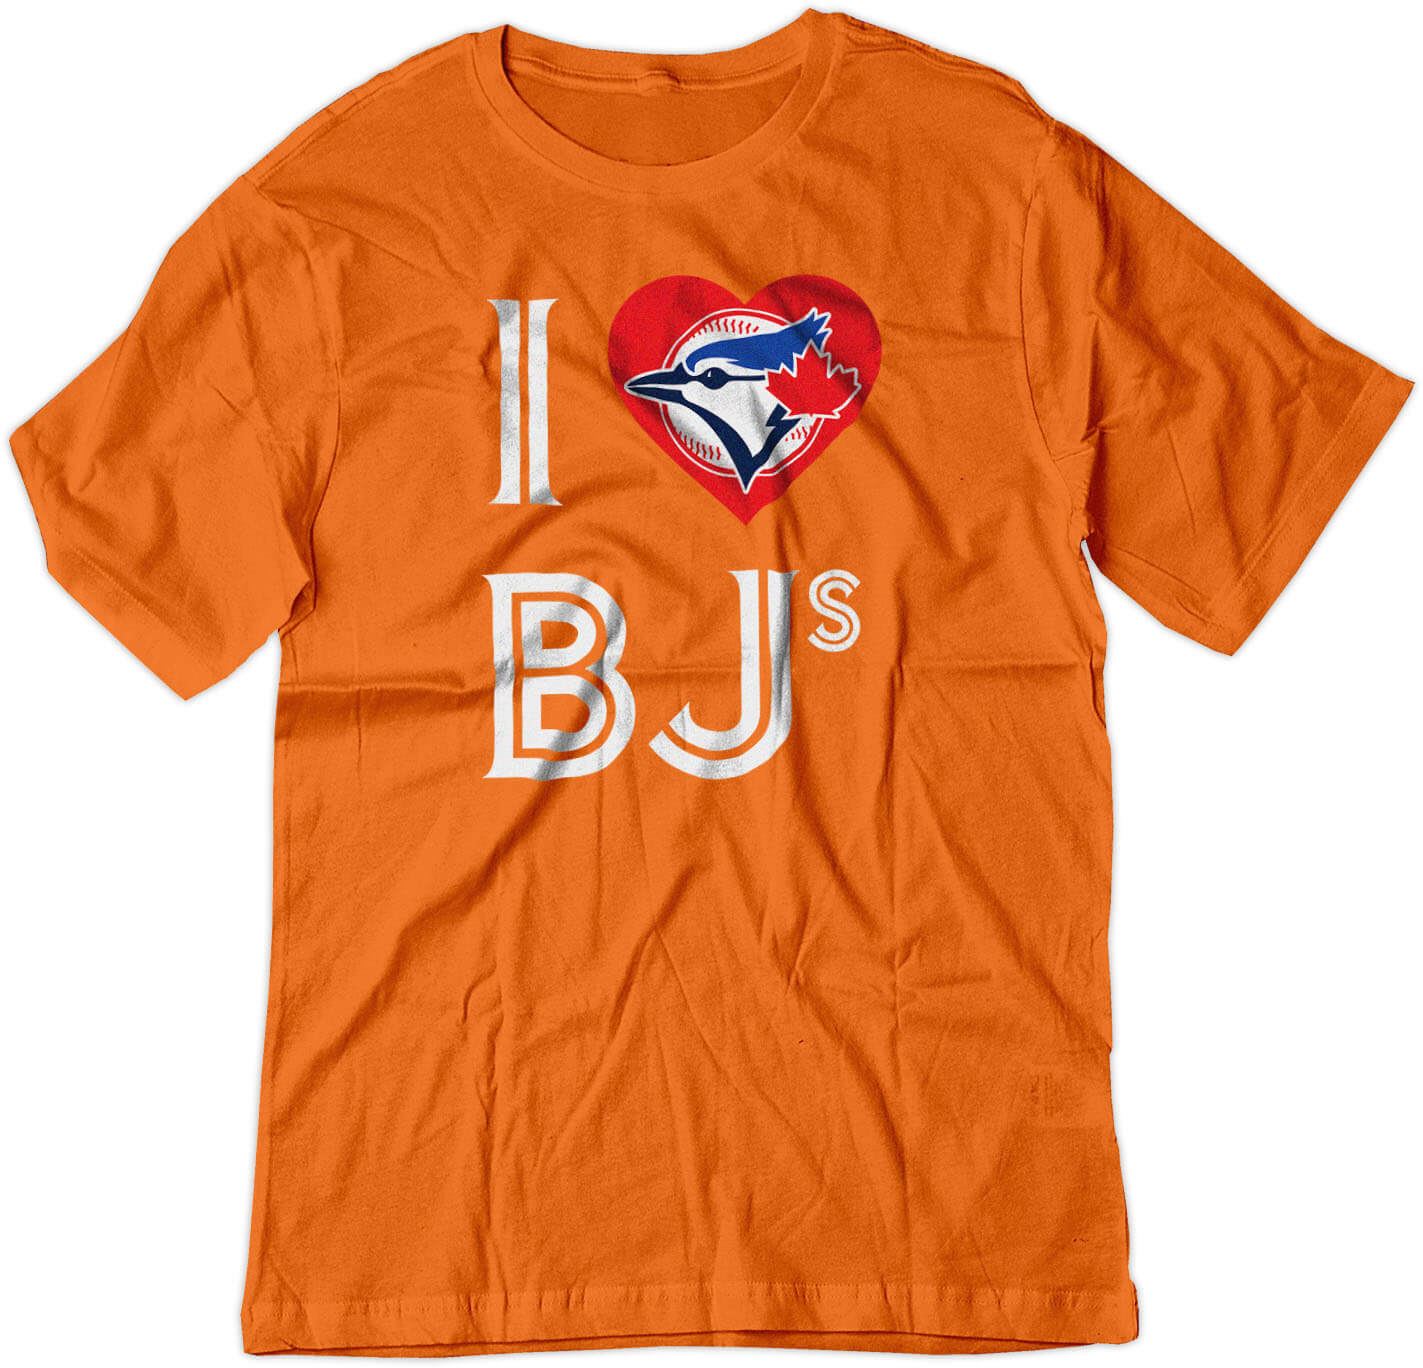 I heart BJs (I love BJs) Original Design T-Shirt - Toronto Apparel XL